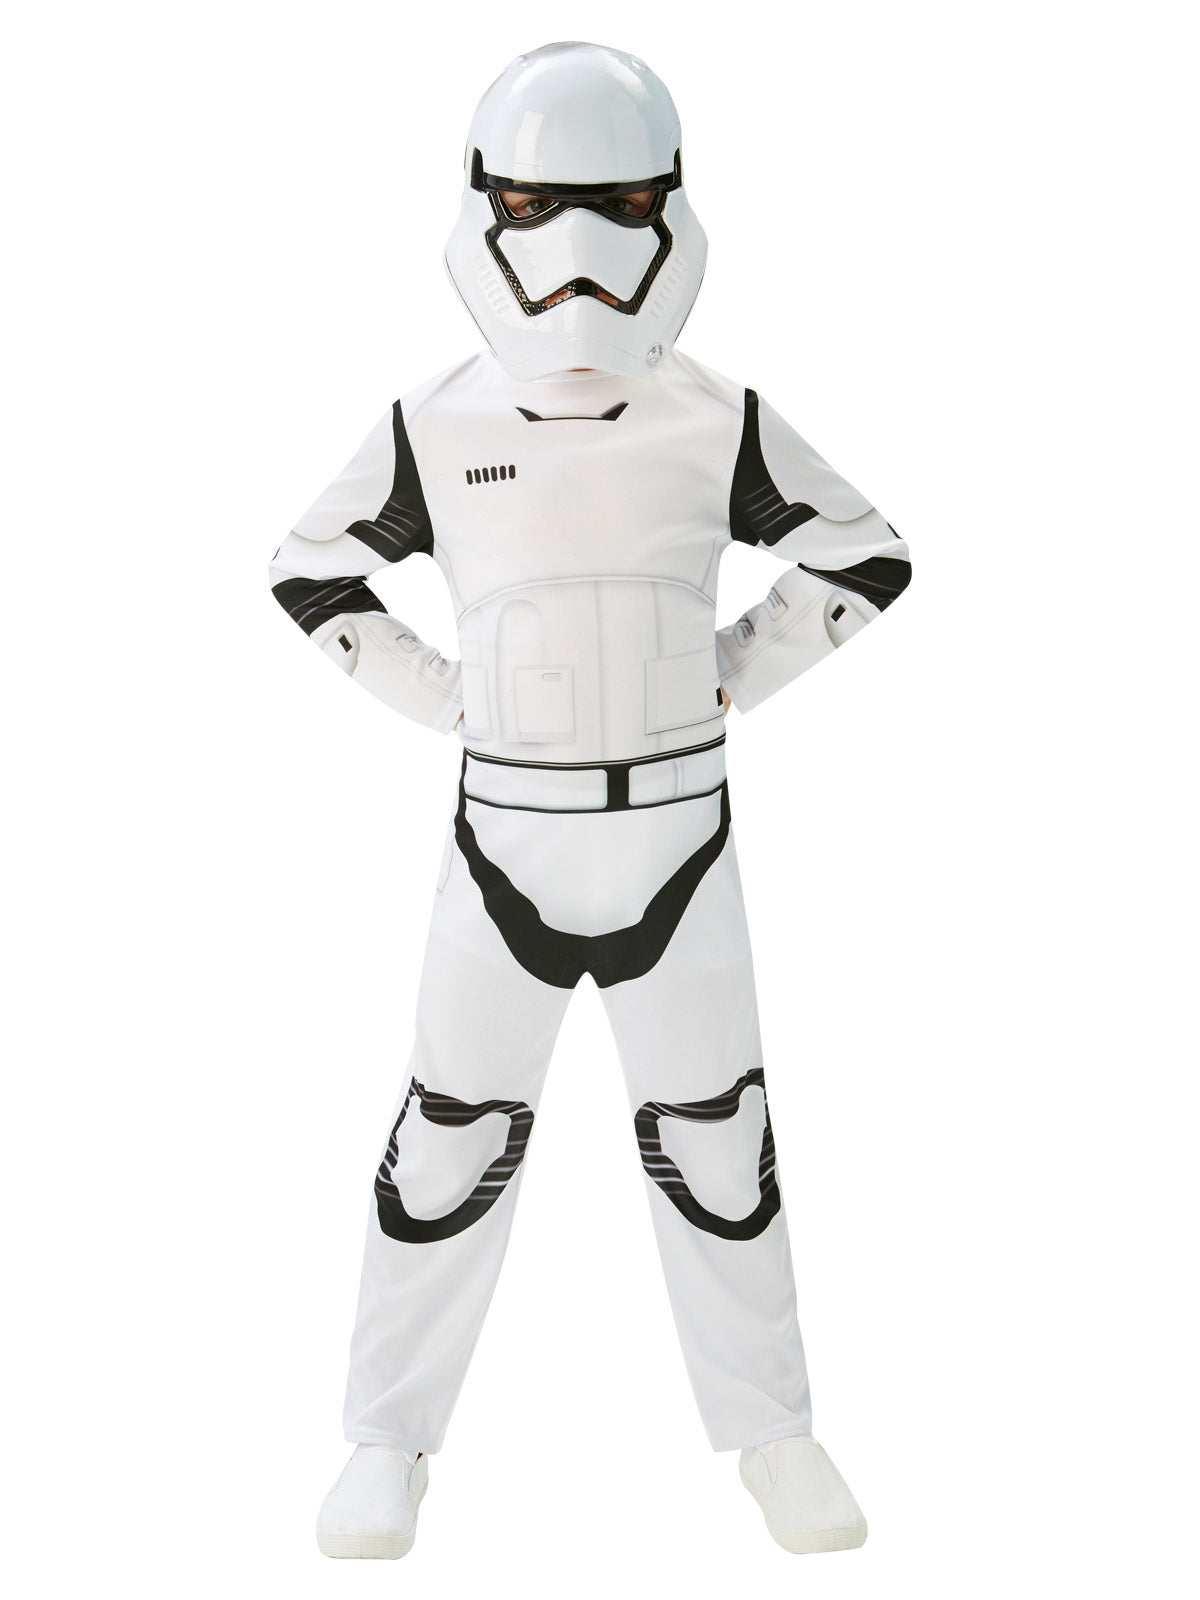 Star Wars Stormtrooper Classic Boys Costume